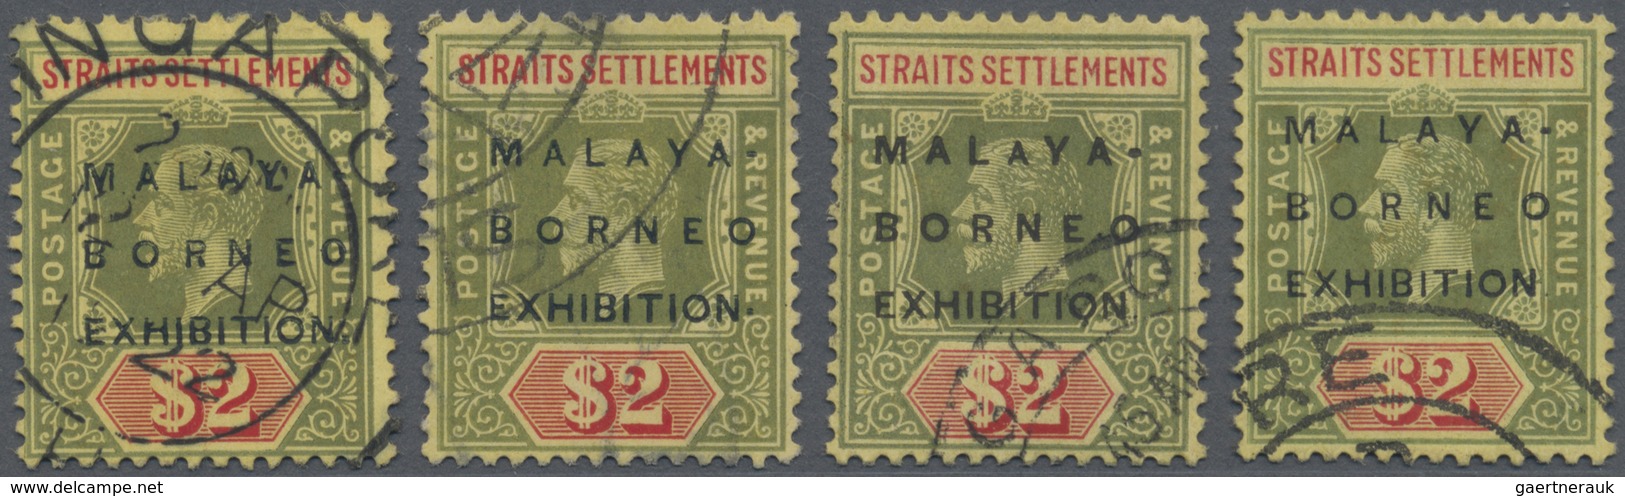 O Malaiische Staaten - Straits Settlements: 1922, Malaya-Borneo Exhibition $2 Green And Red/orange-buf - Straits Settlements